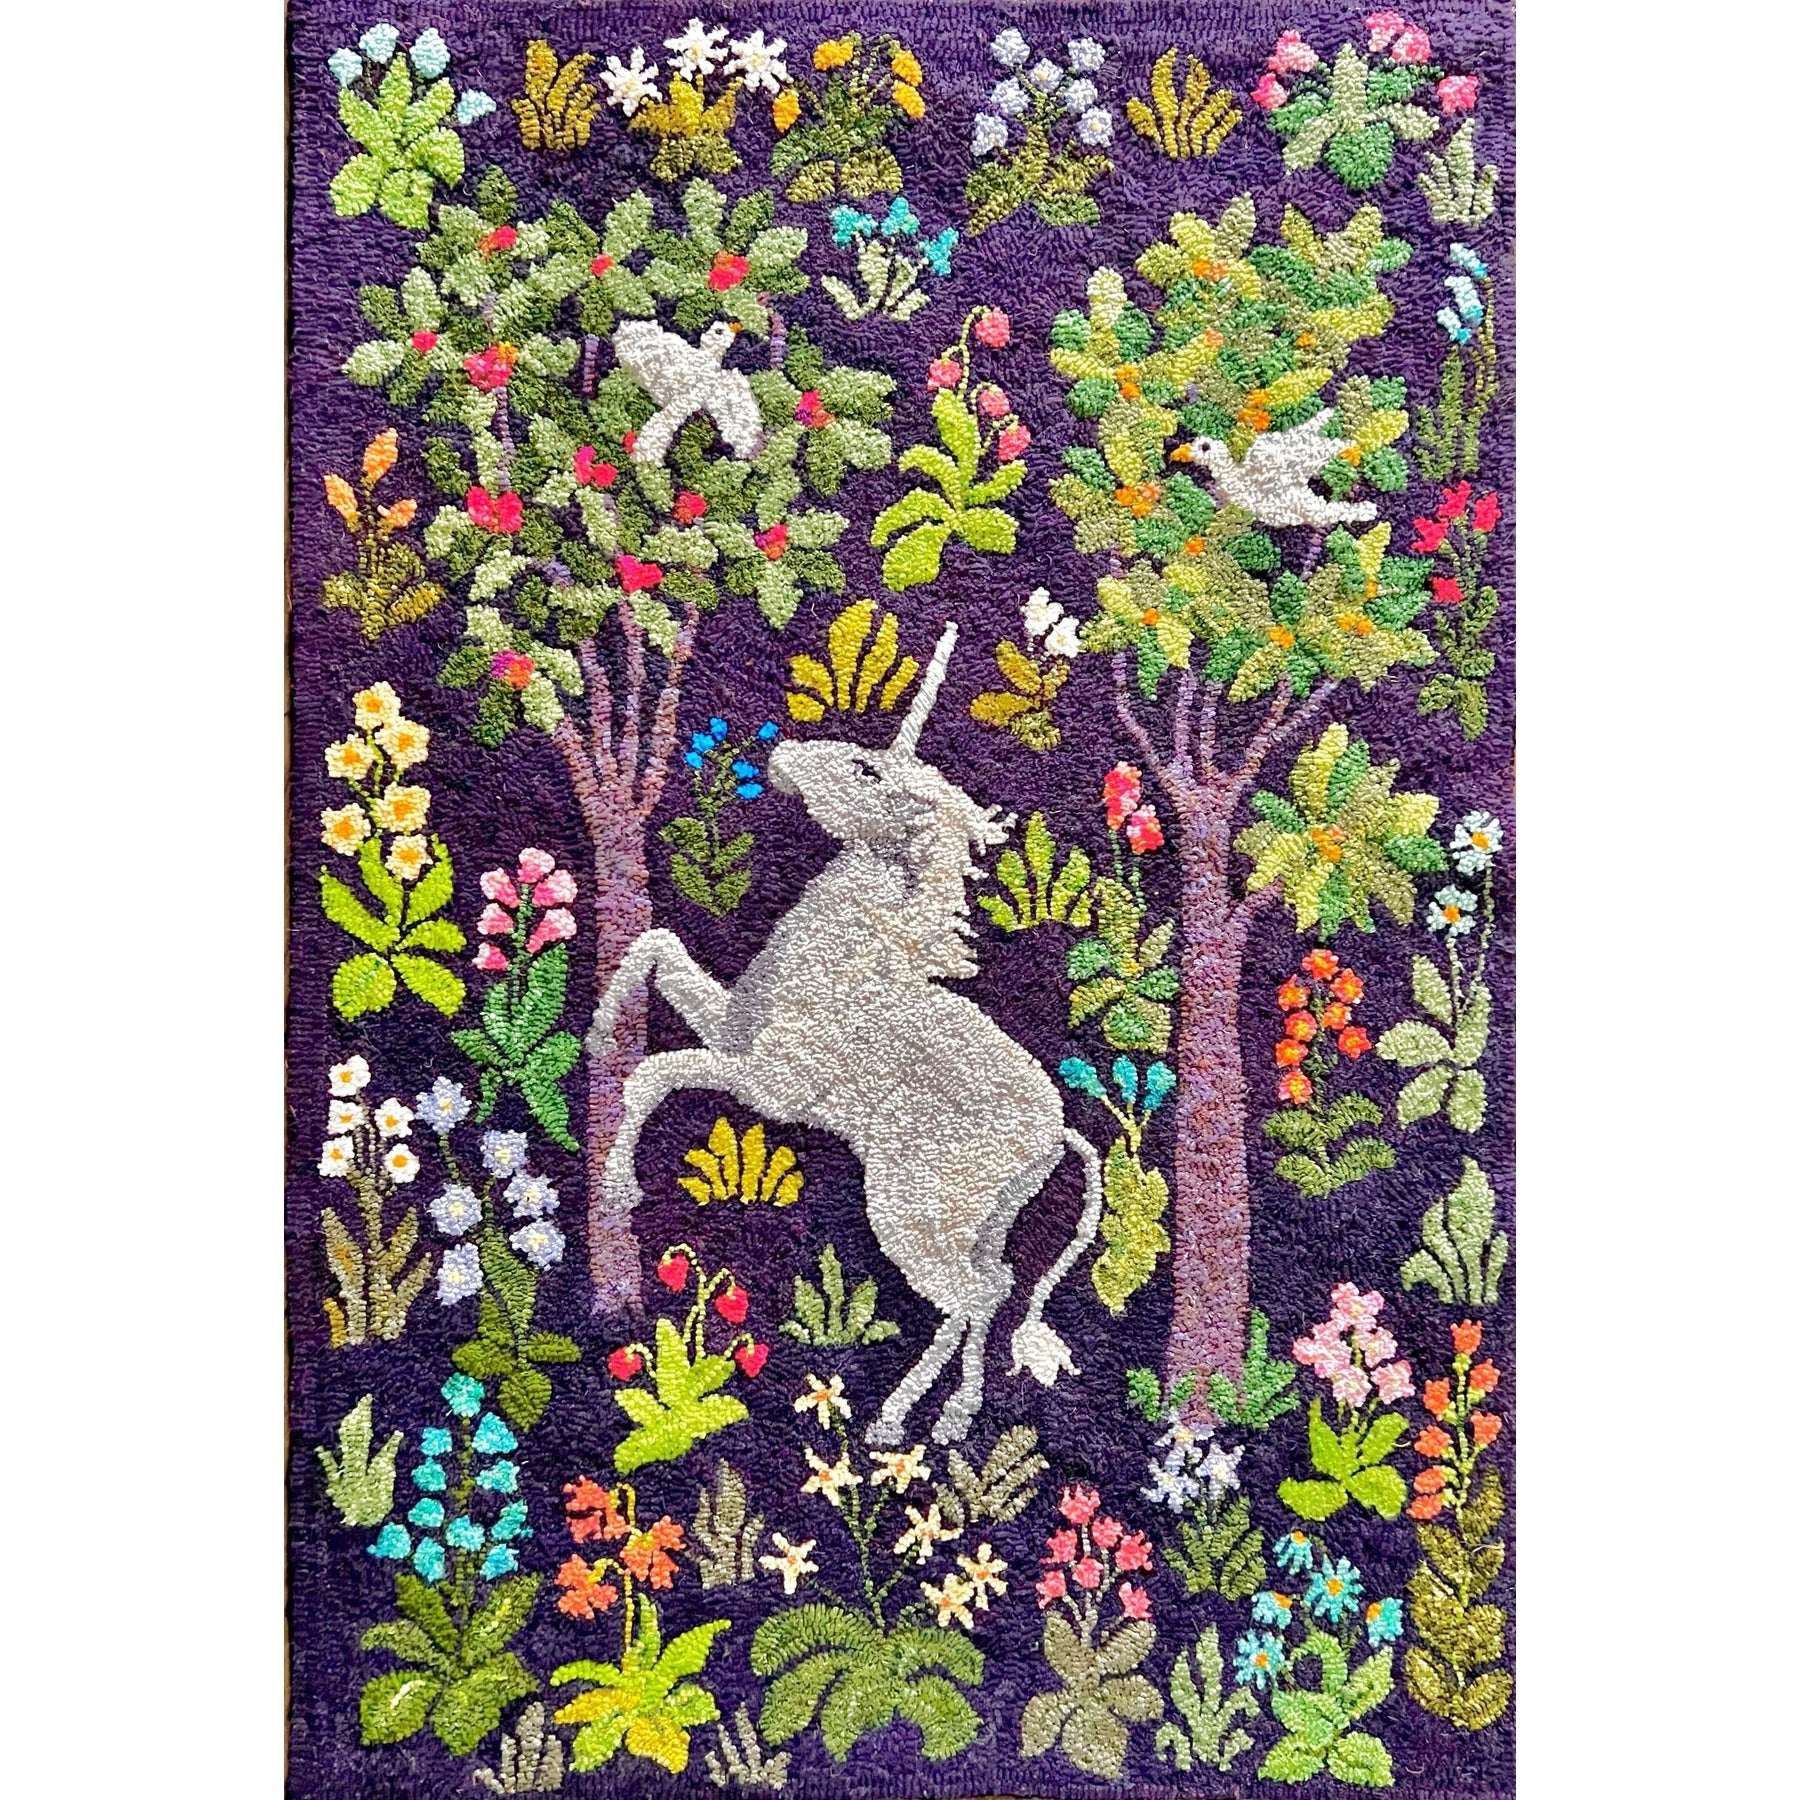 1277: Unicorn Tapestry